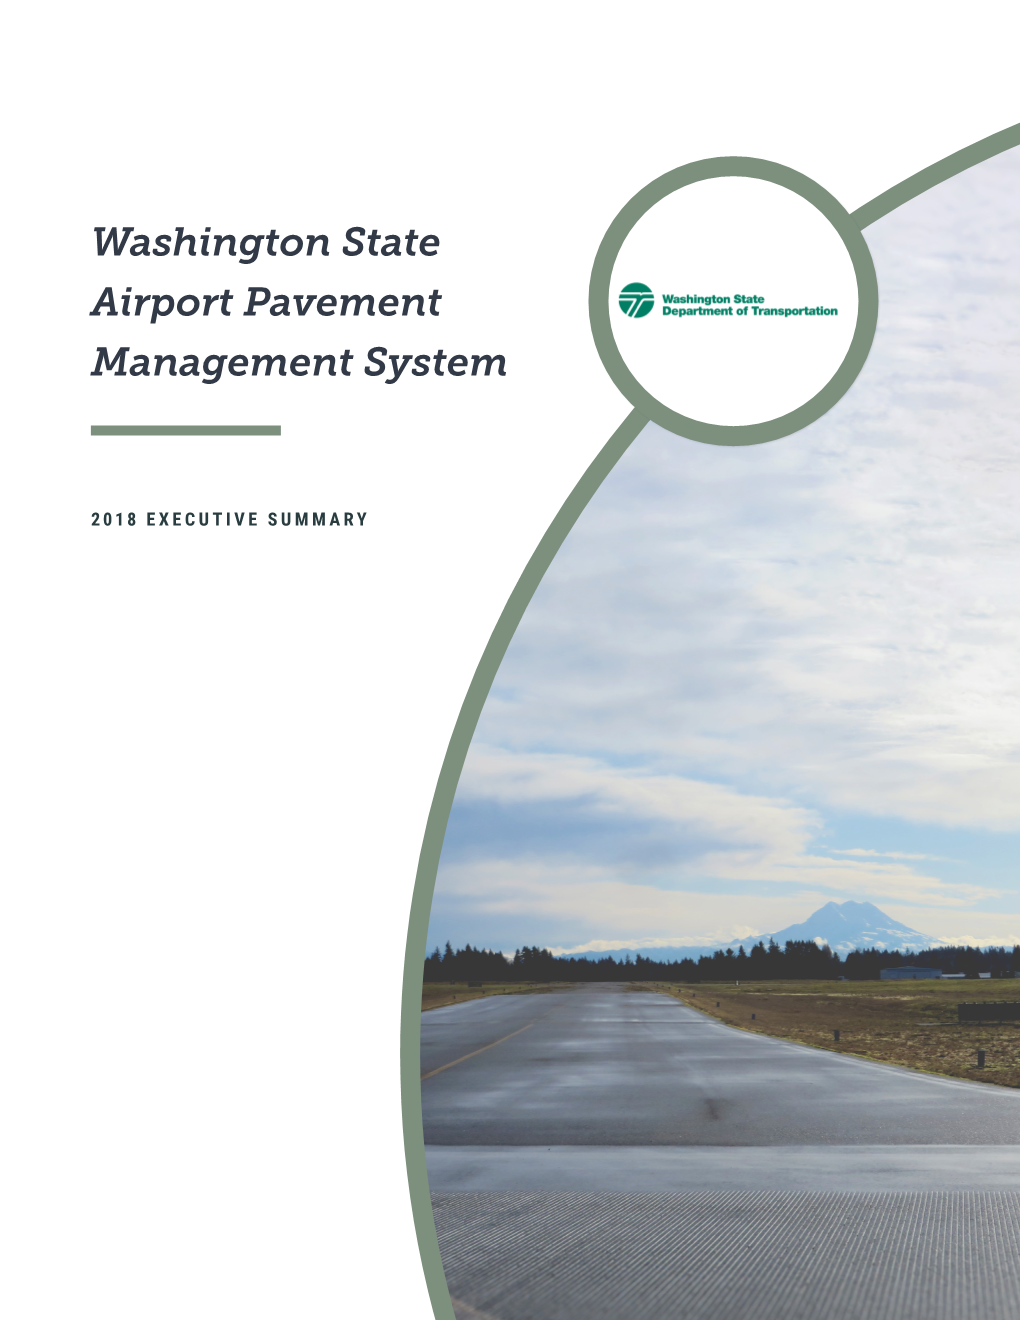 Washington State Airport Pavement Management System